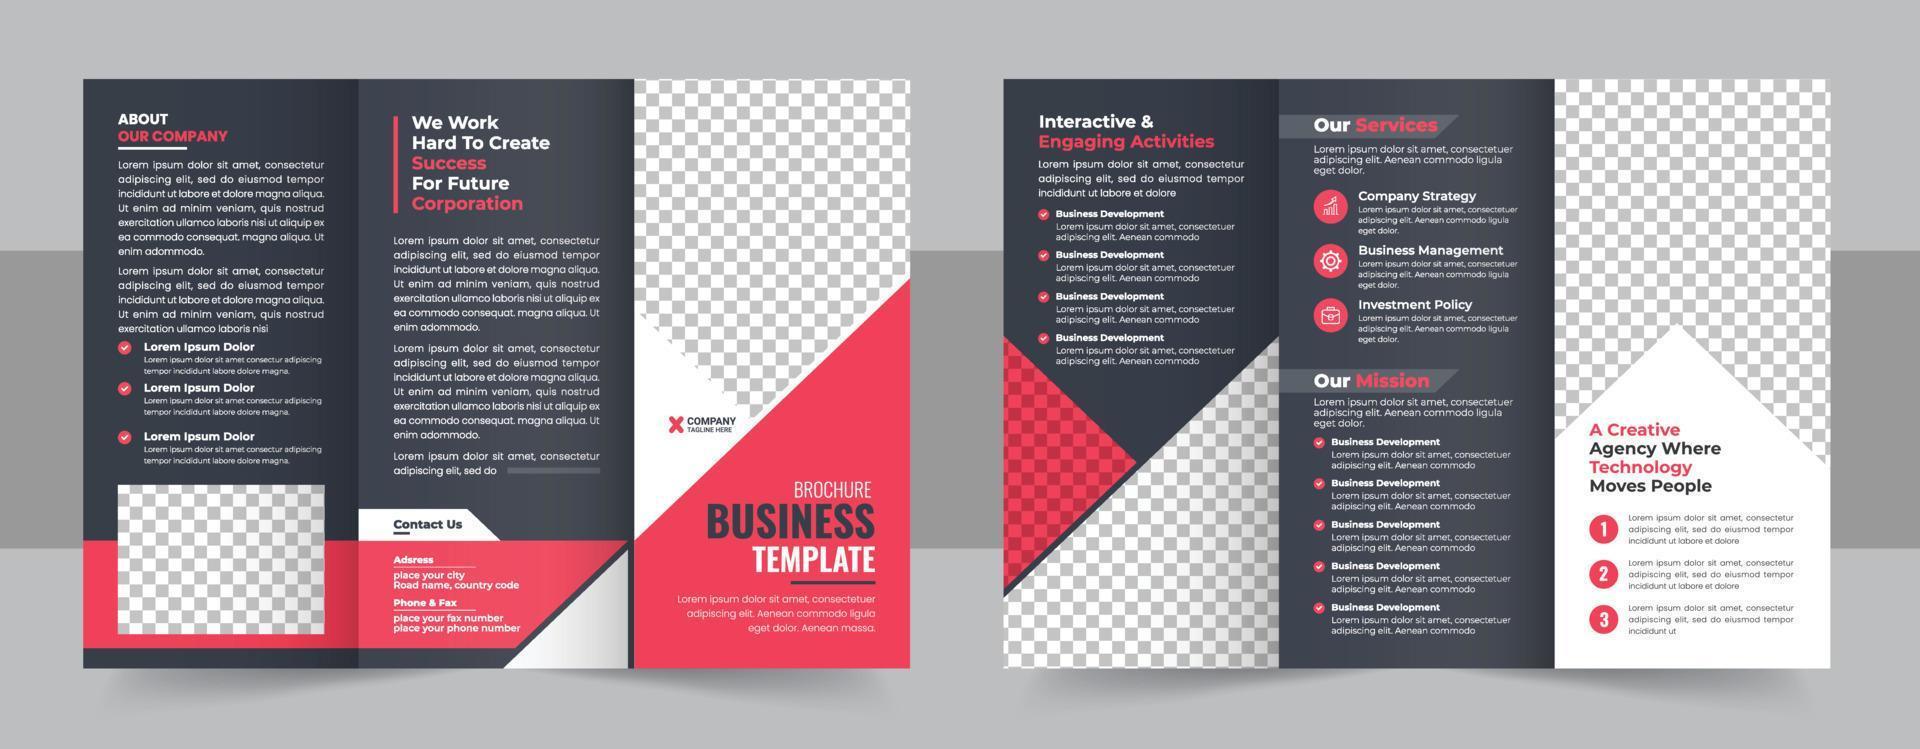 Corporate Trifold Brochure Template Design, Corporate Business Brochure Trifold Template Design vector